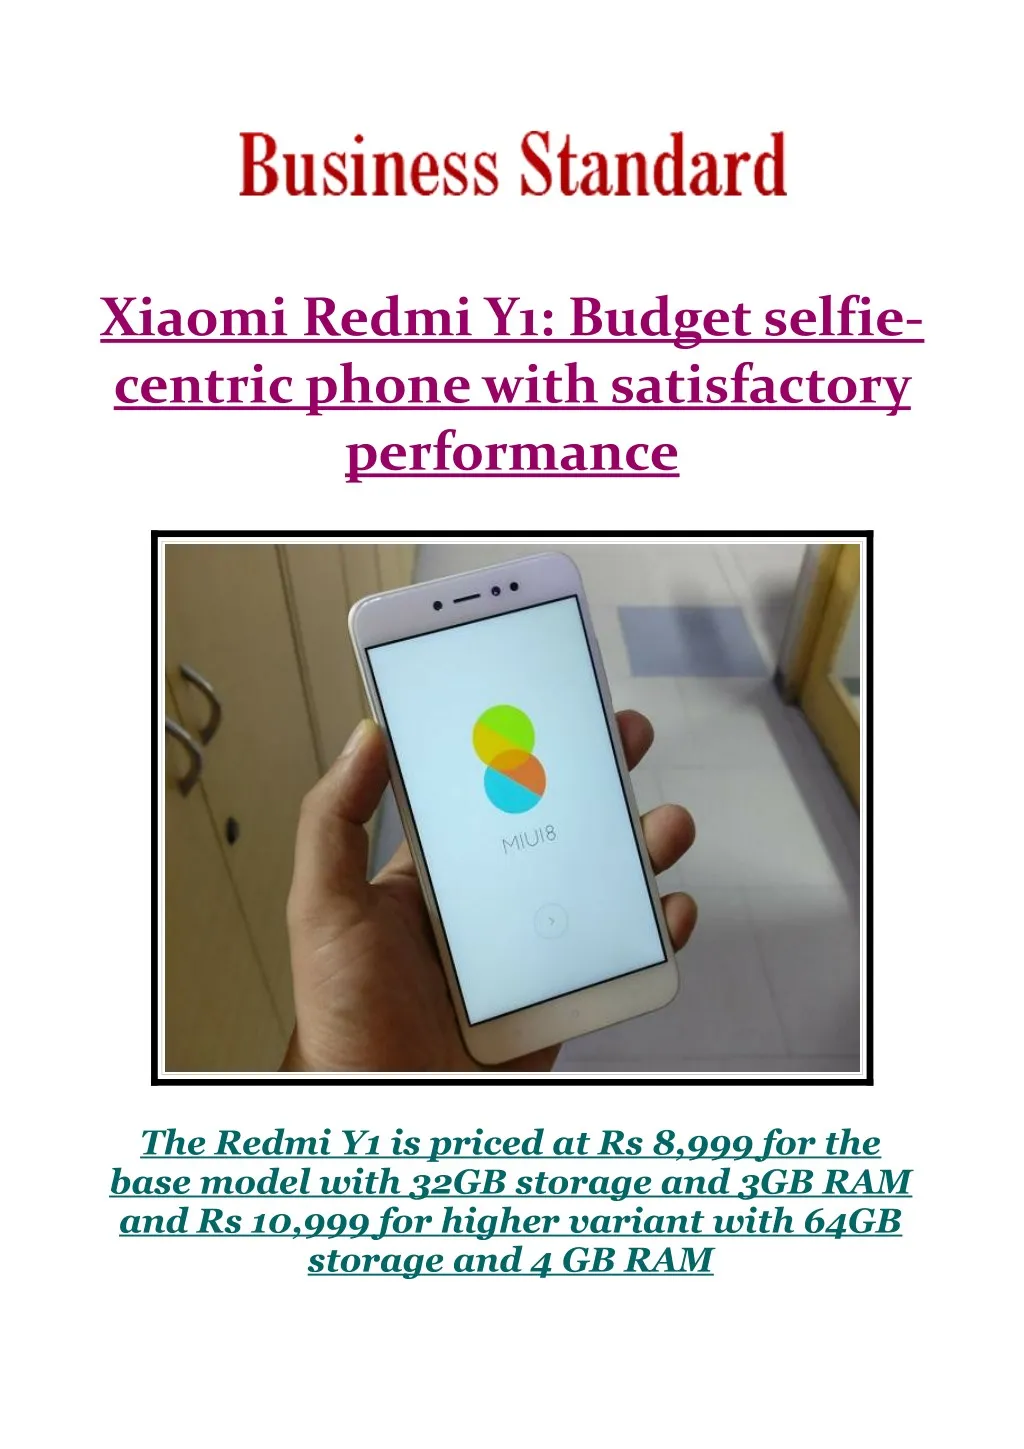 xiaomi redmi y1 budget selfie centric phone with